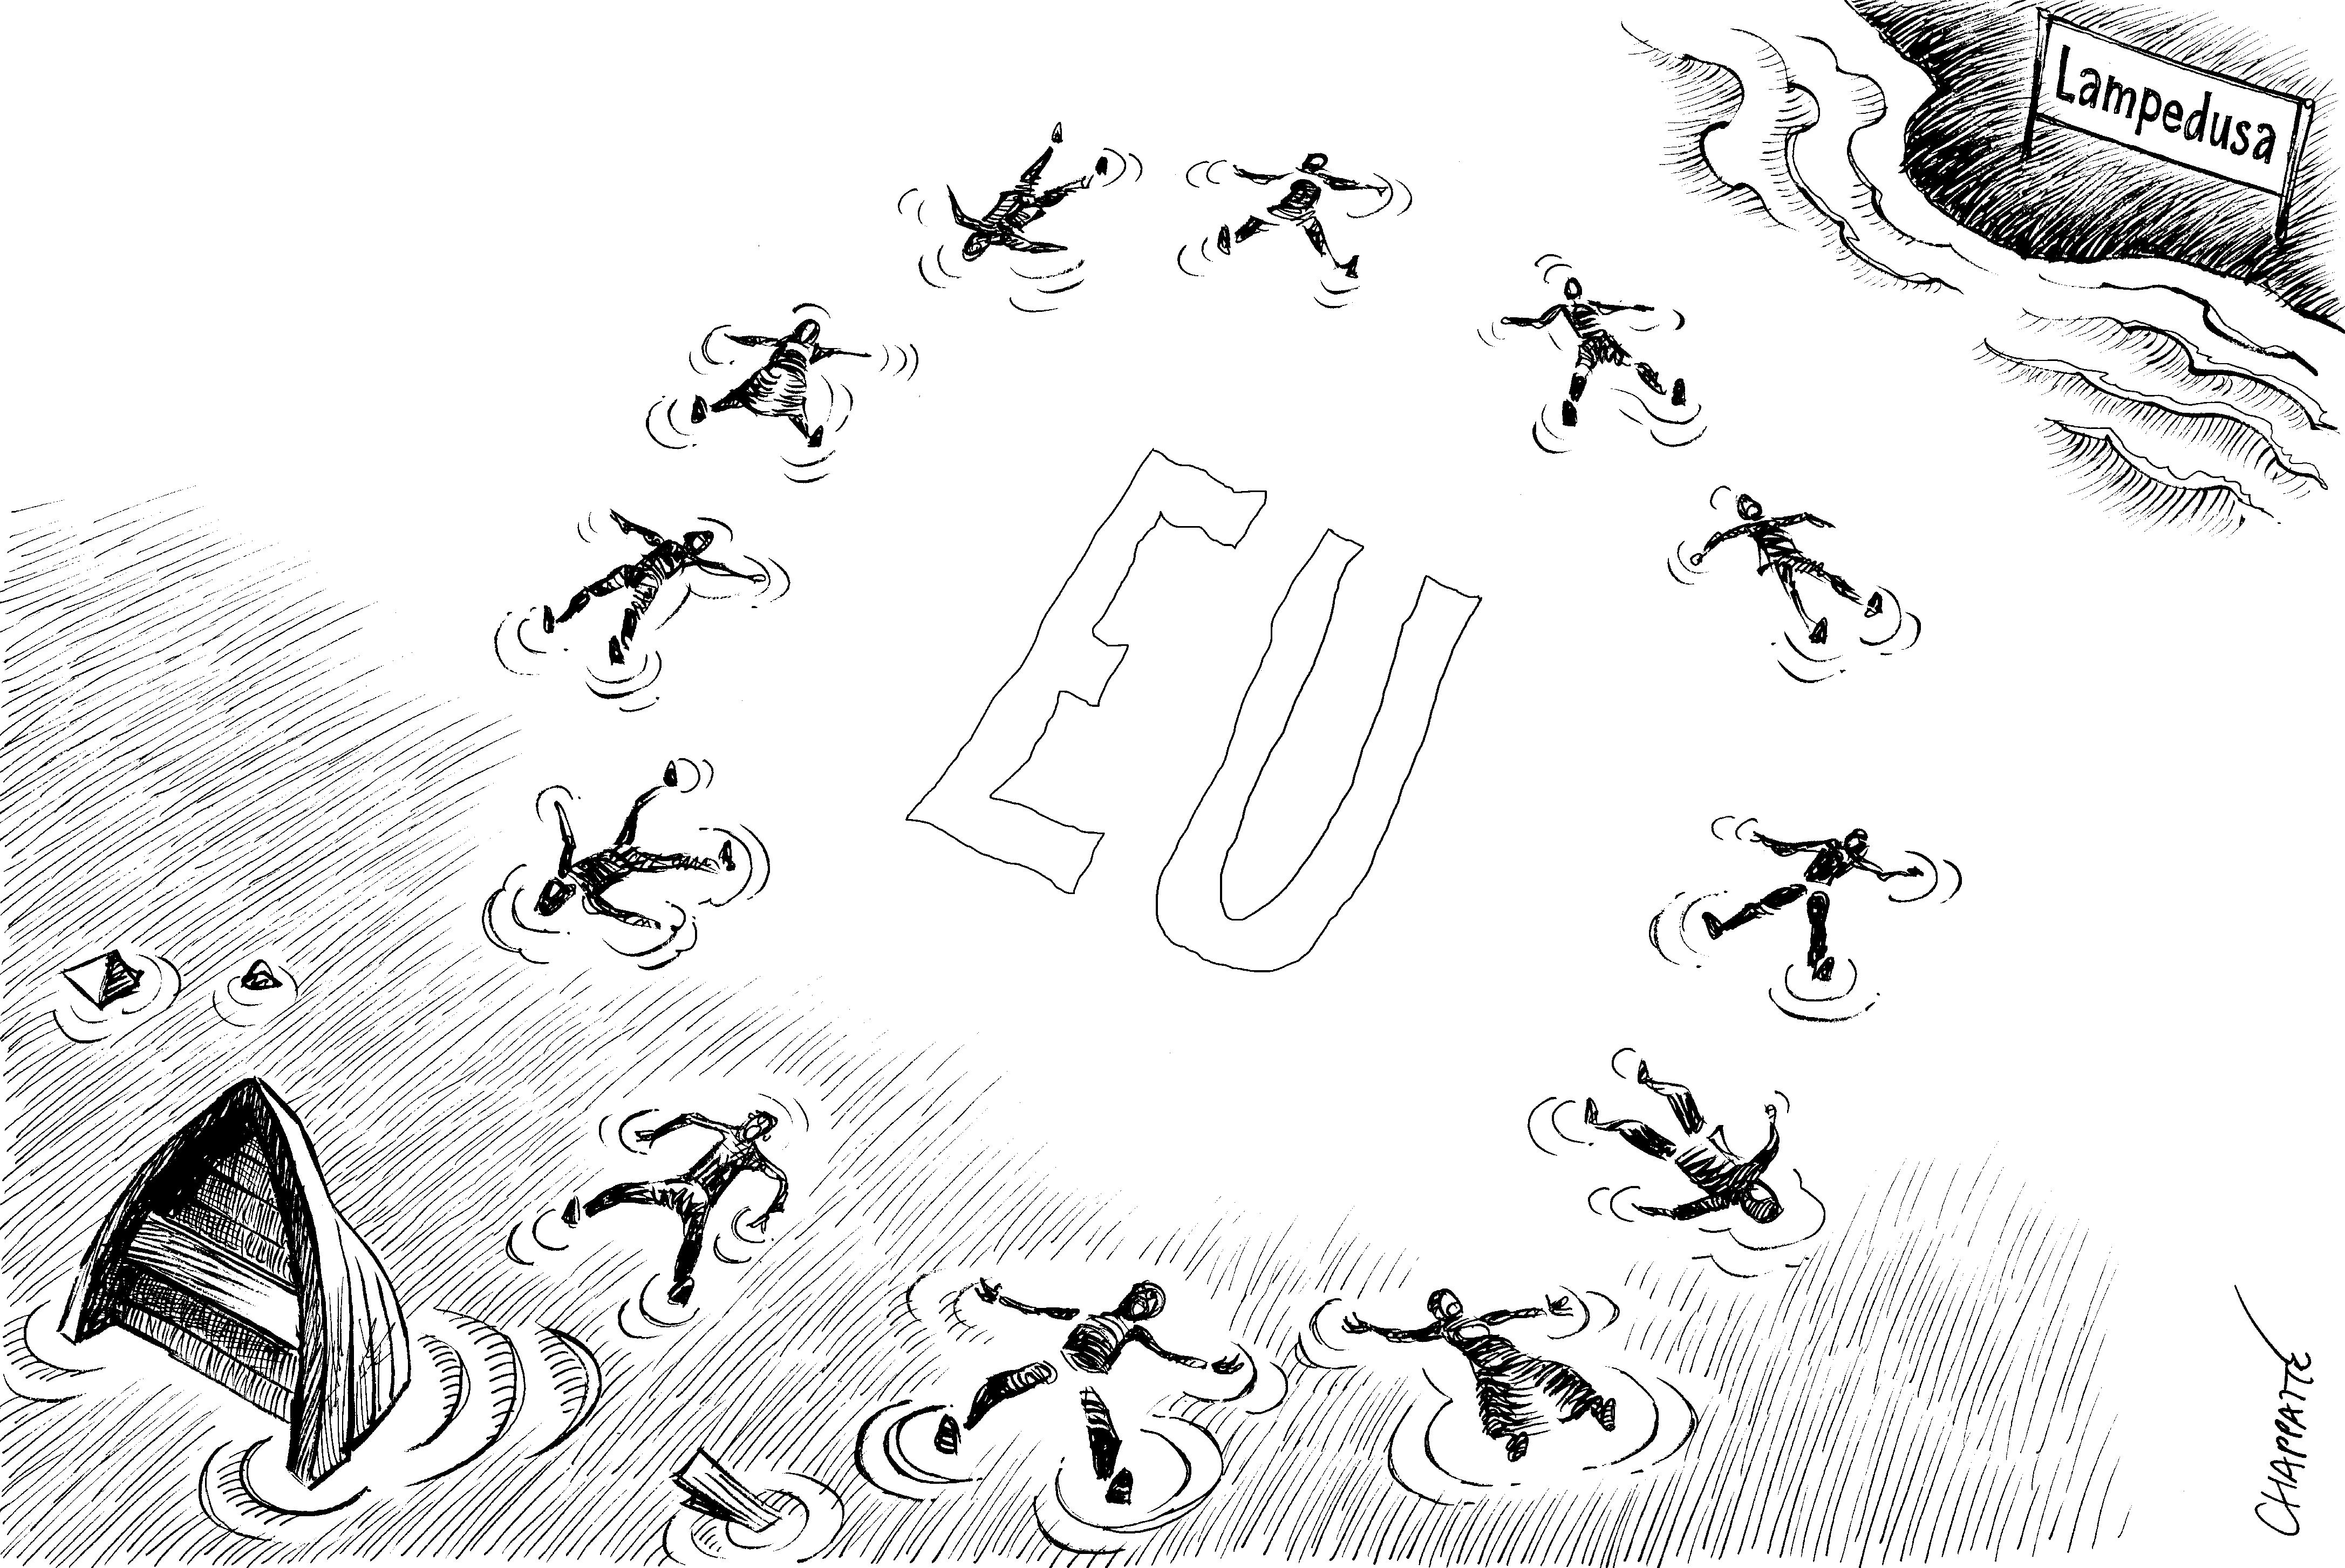 Deadly migration to Europe (black/white)